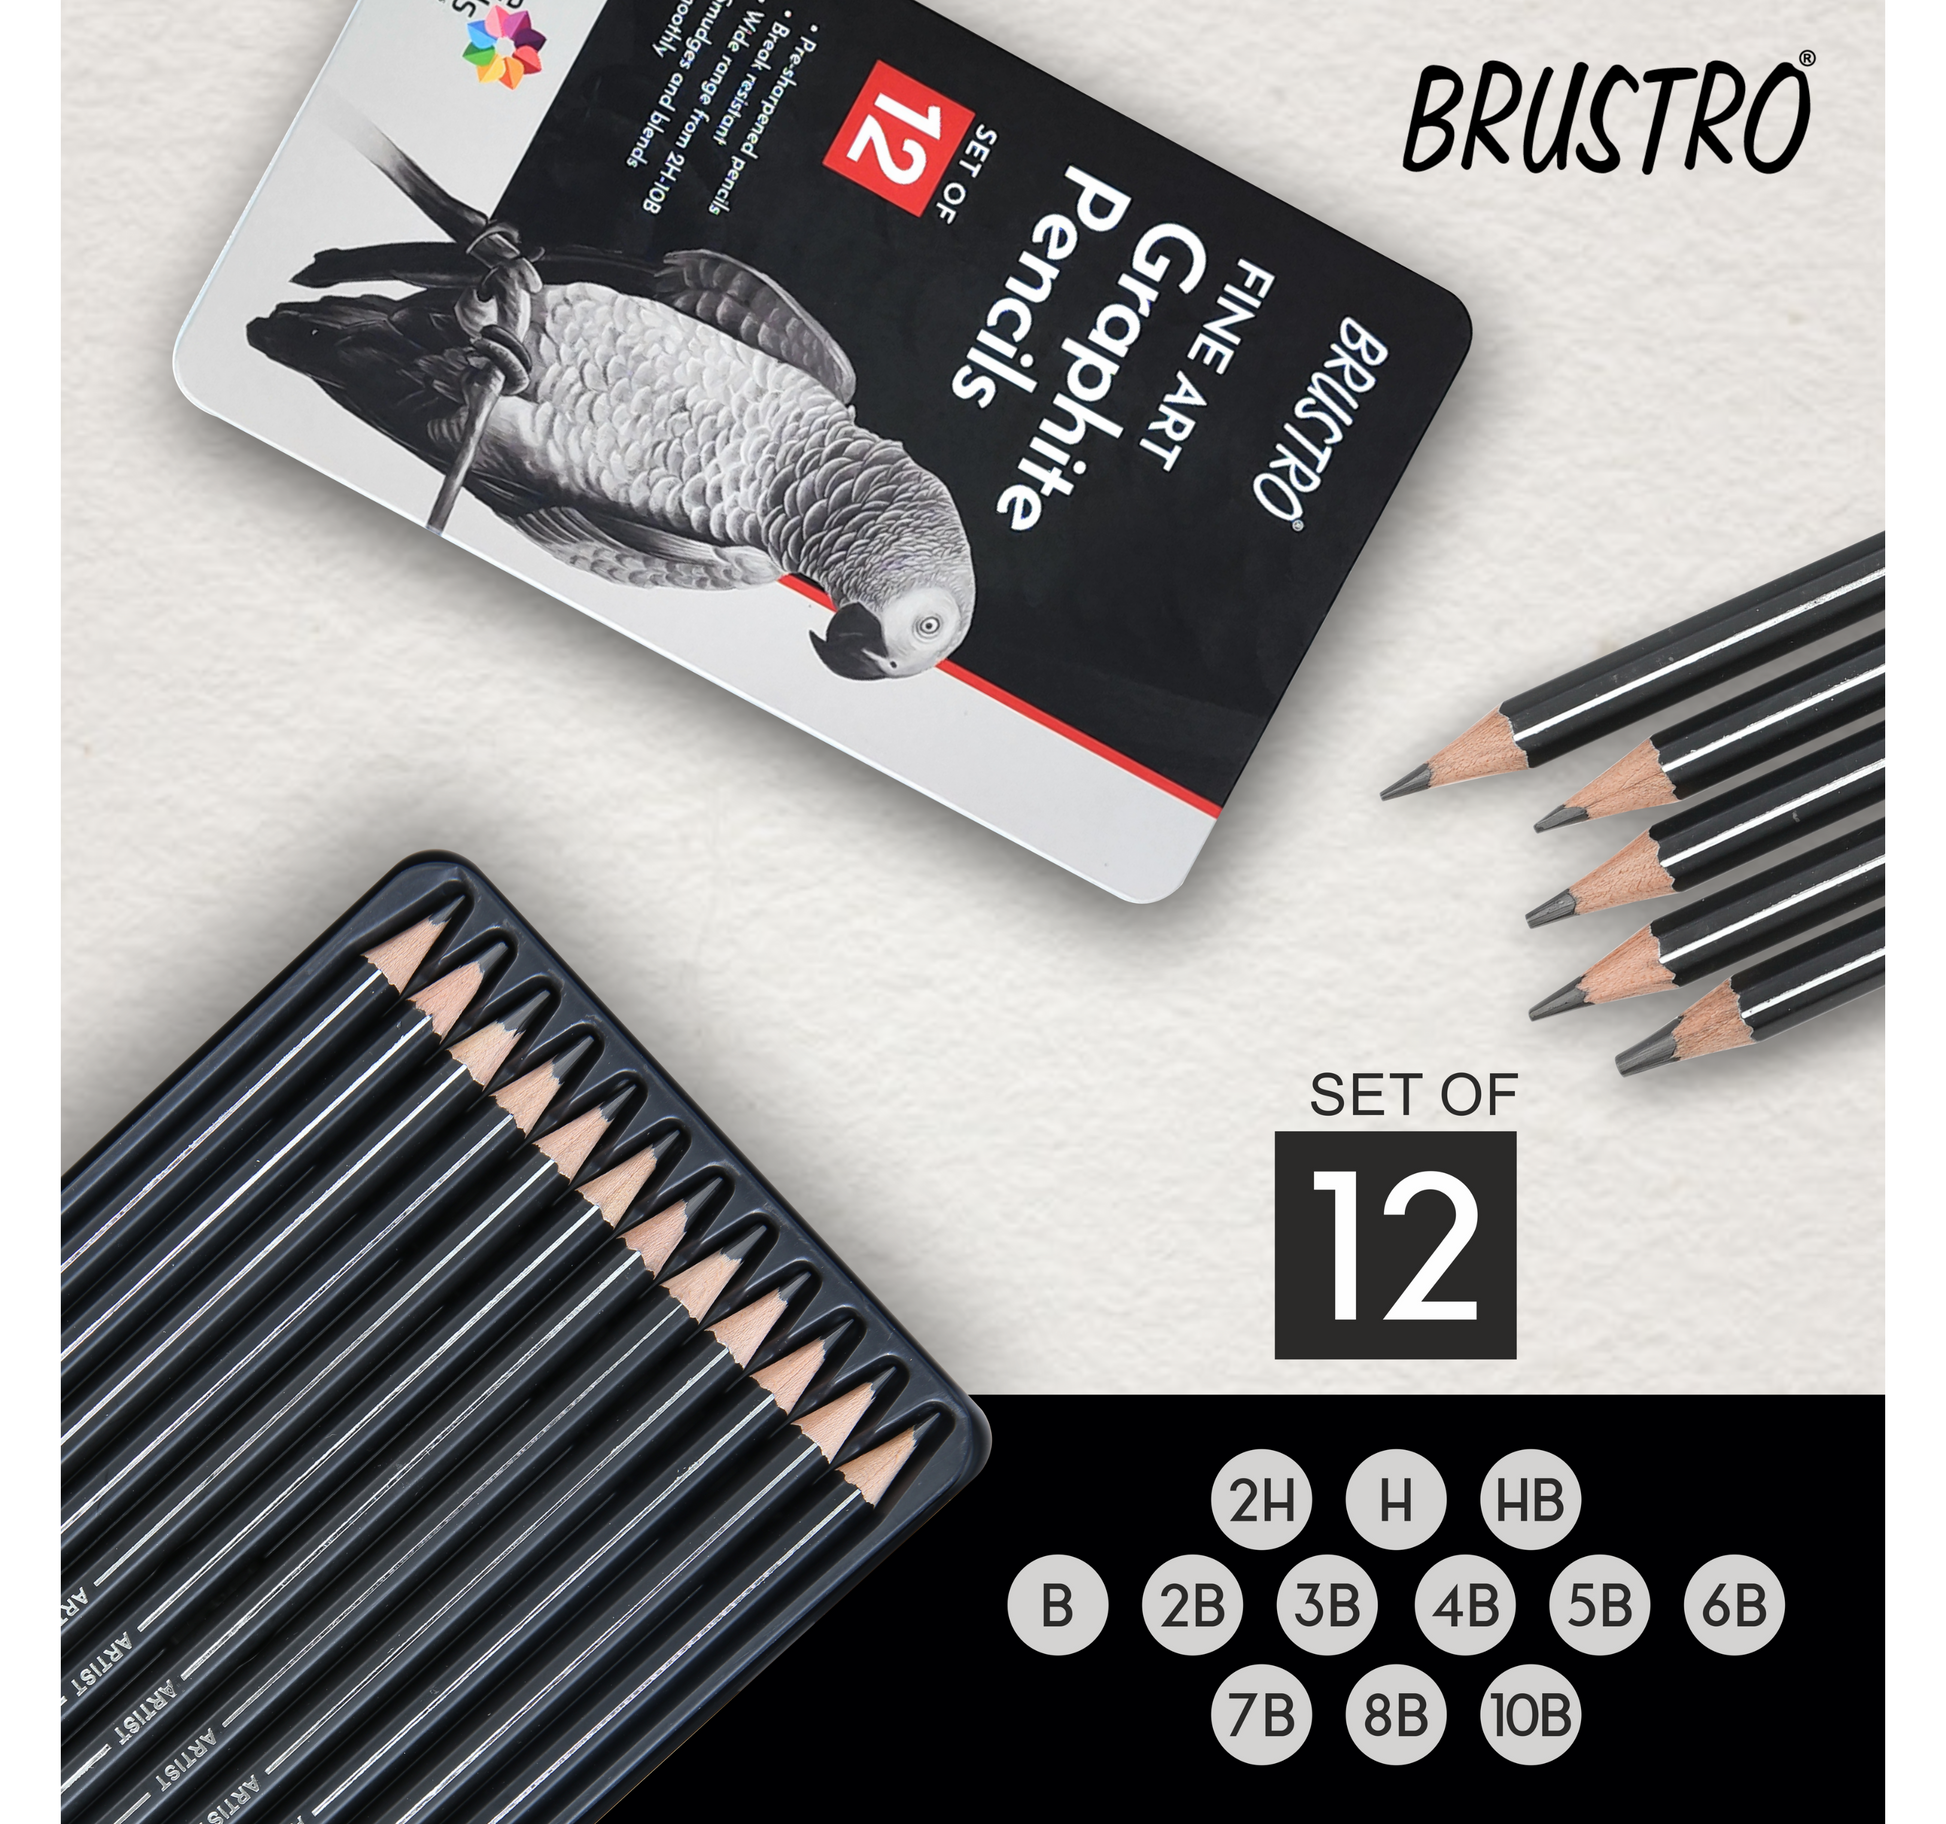 Arteza Sketchbooks (3-Pack) and 12 Graphite Pencils Set Sketching